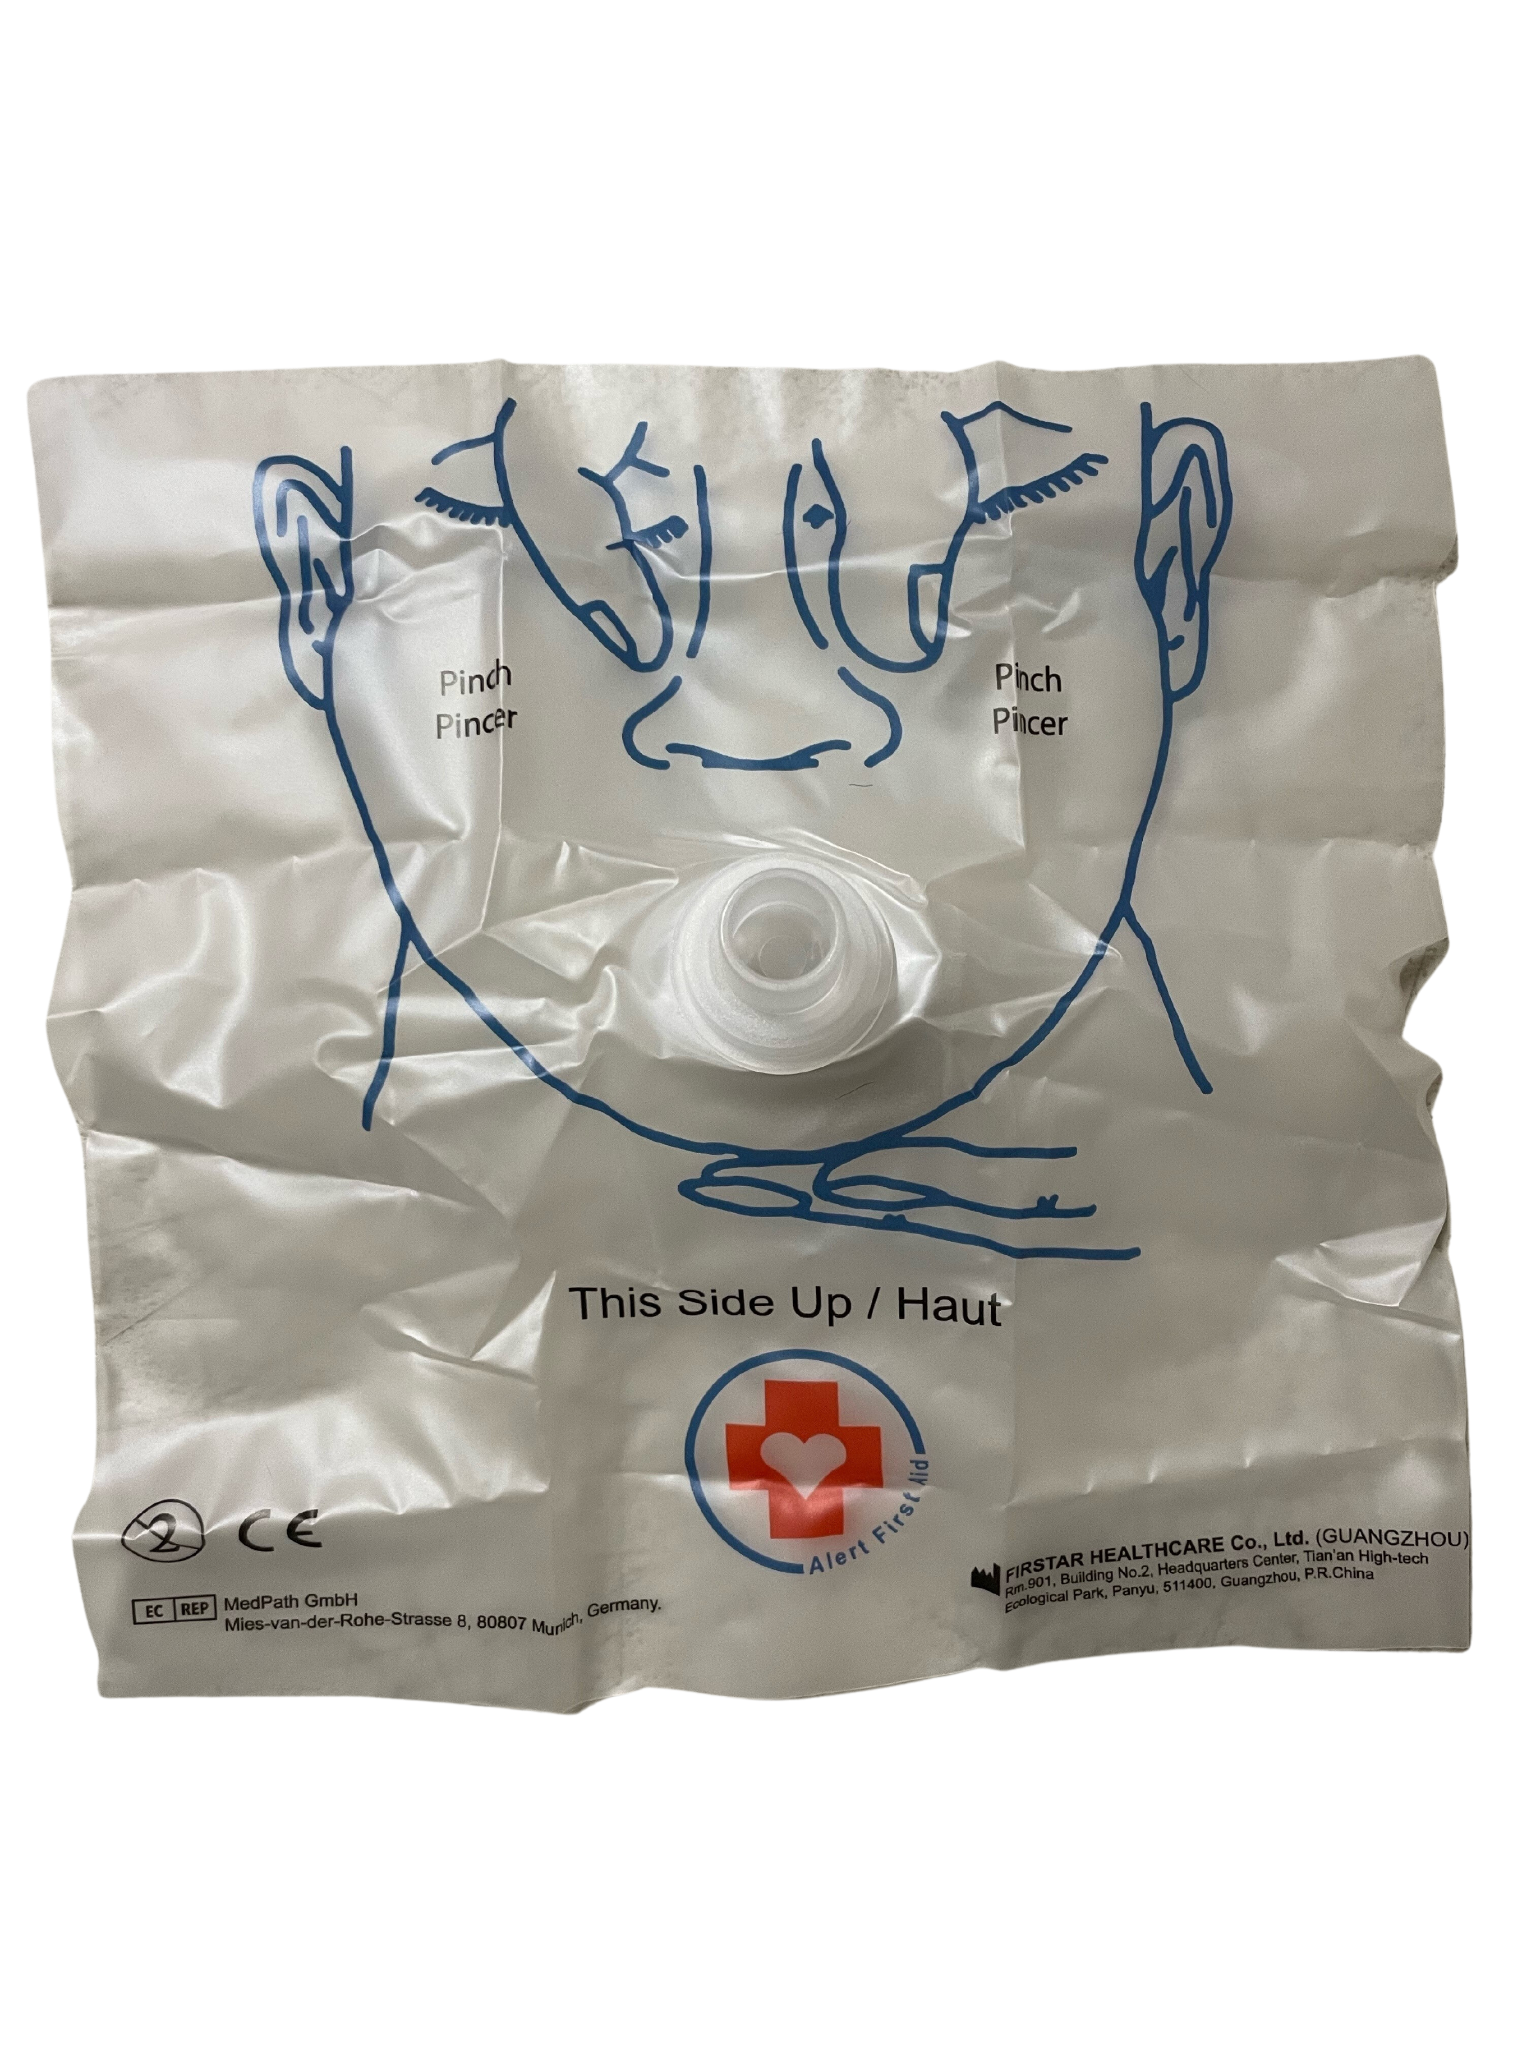 Alert First Aid CPR Keychain - Black image